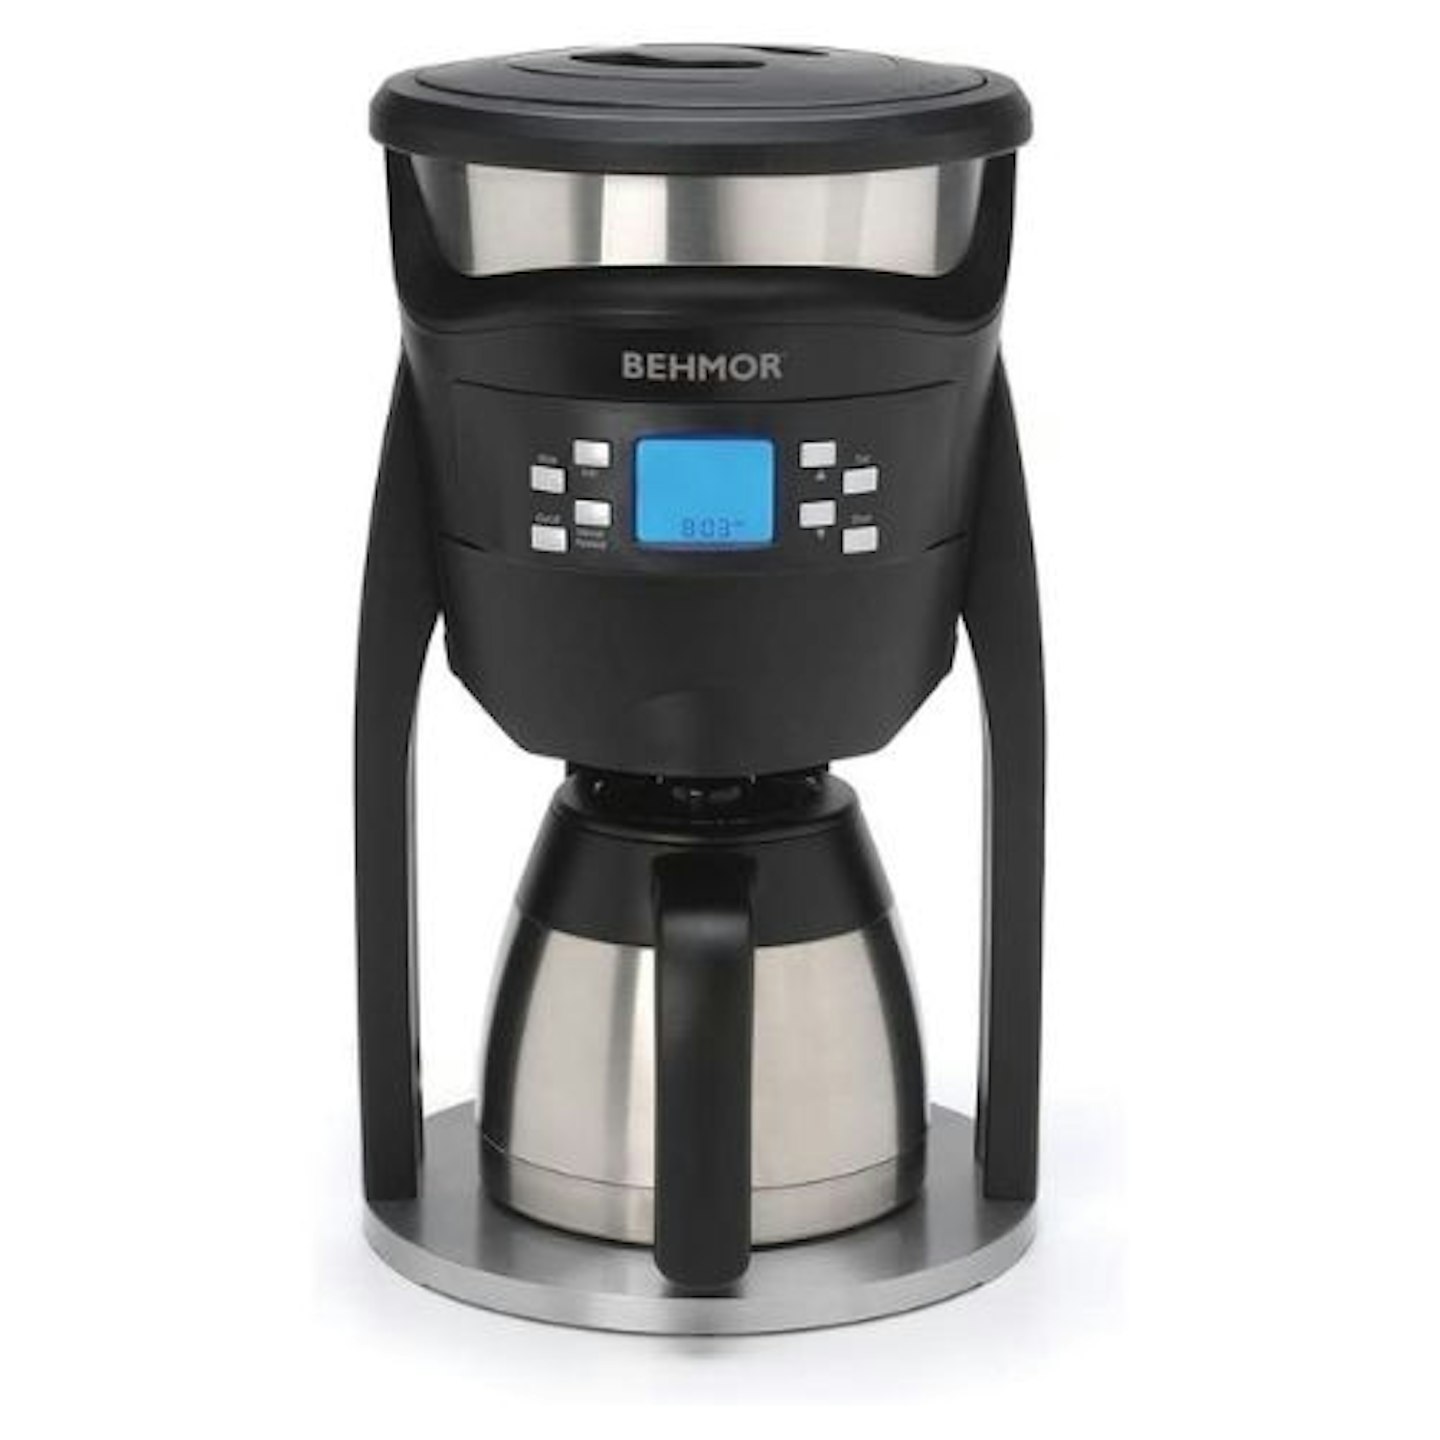 Behmor, Inc. 5393 Brazen Coffee Maker